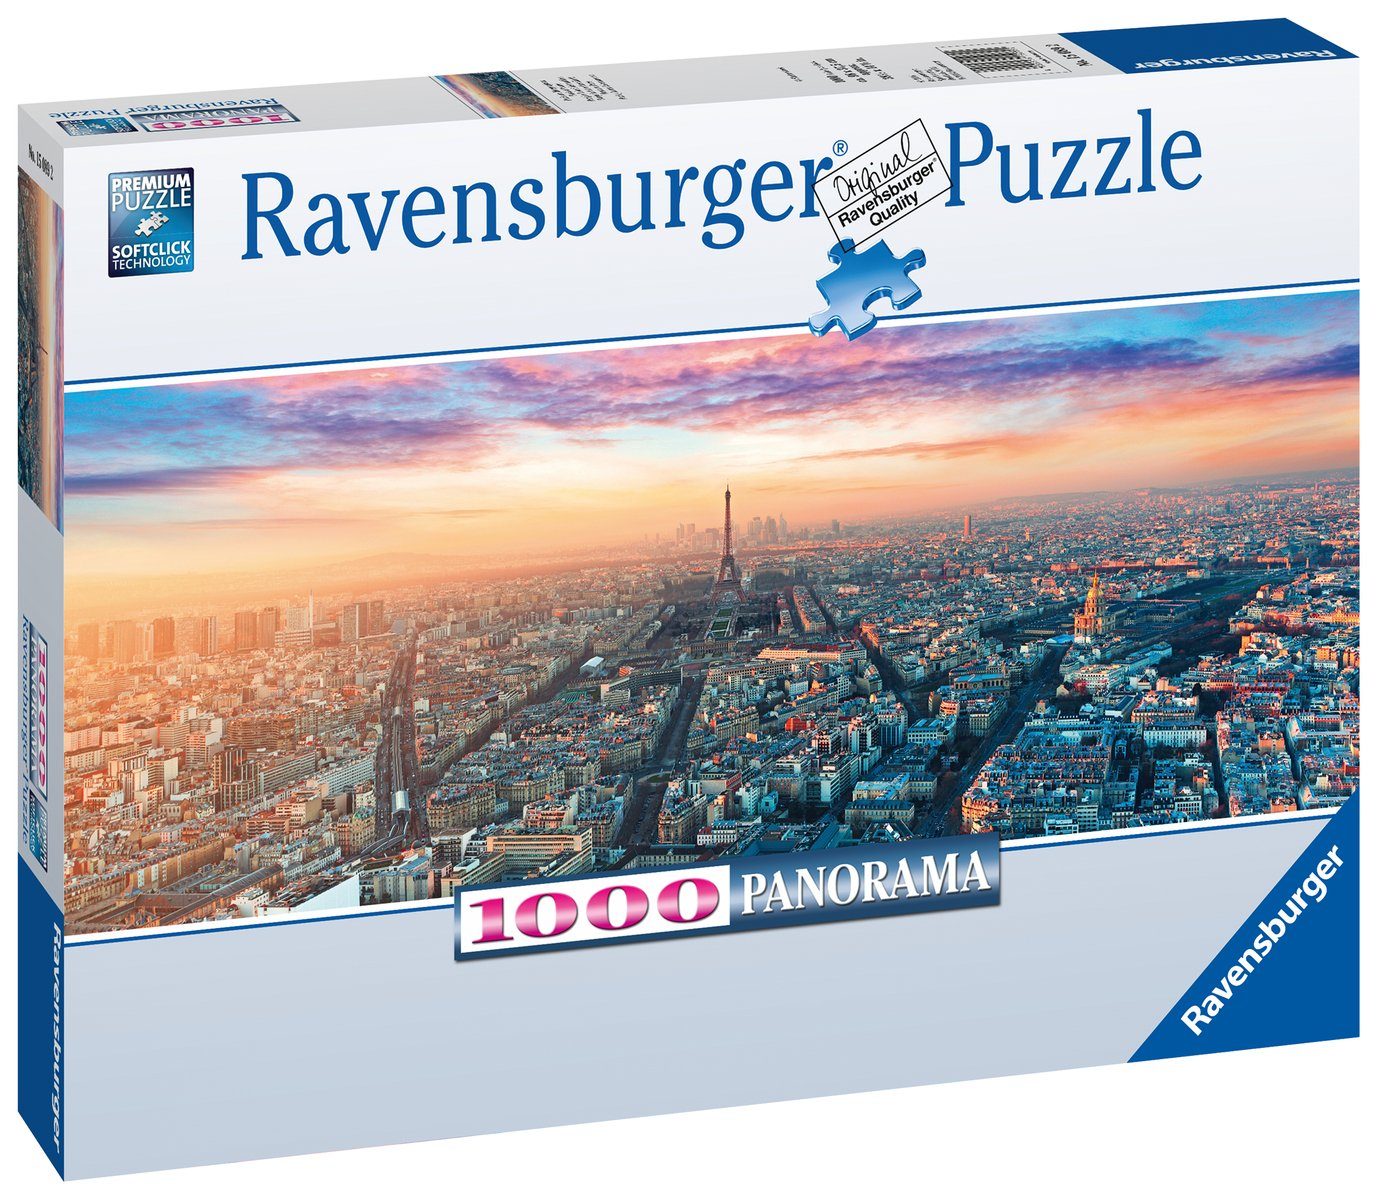 Ravensburger Puzzle Paris im Morgenglanz 1000 Teile Panorama Puzzle, Puzzleteile